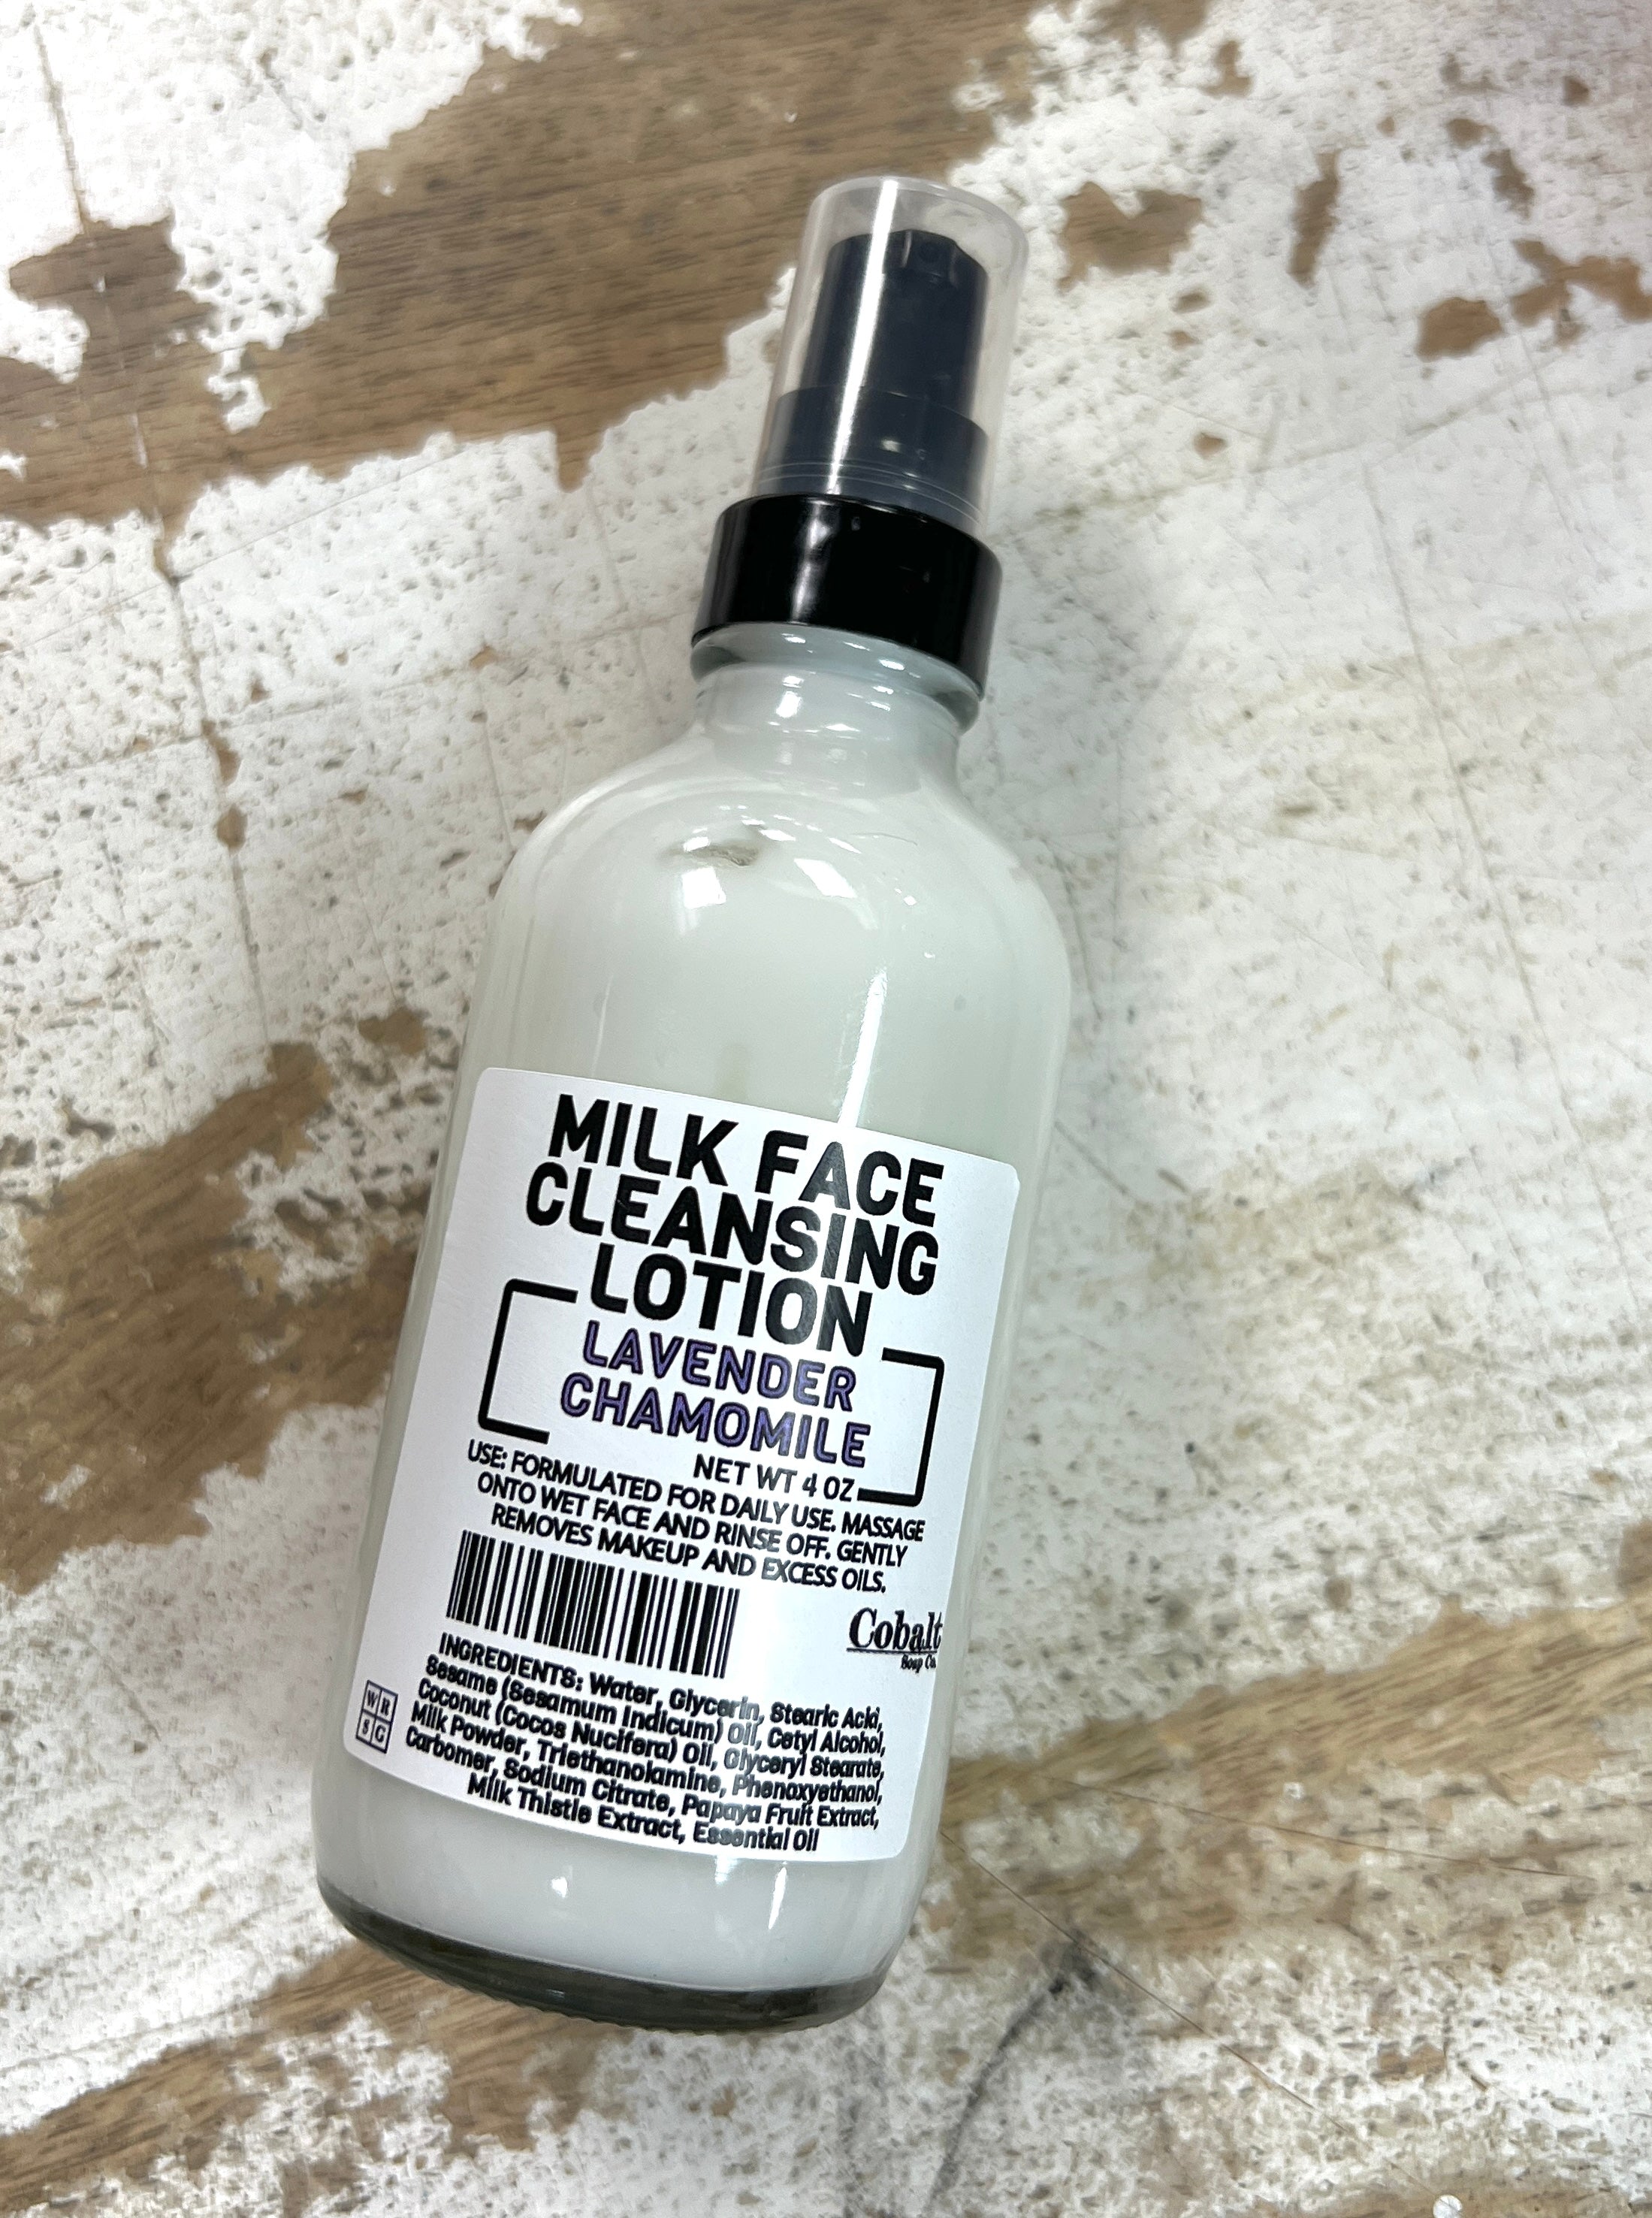 Cobalt Soap Co. Milk Face Cleansing Lotion